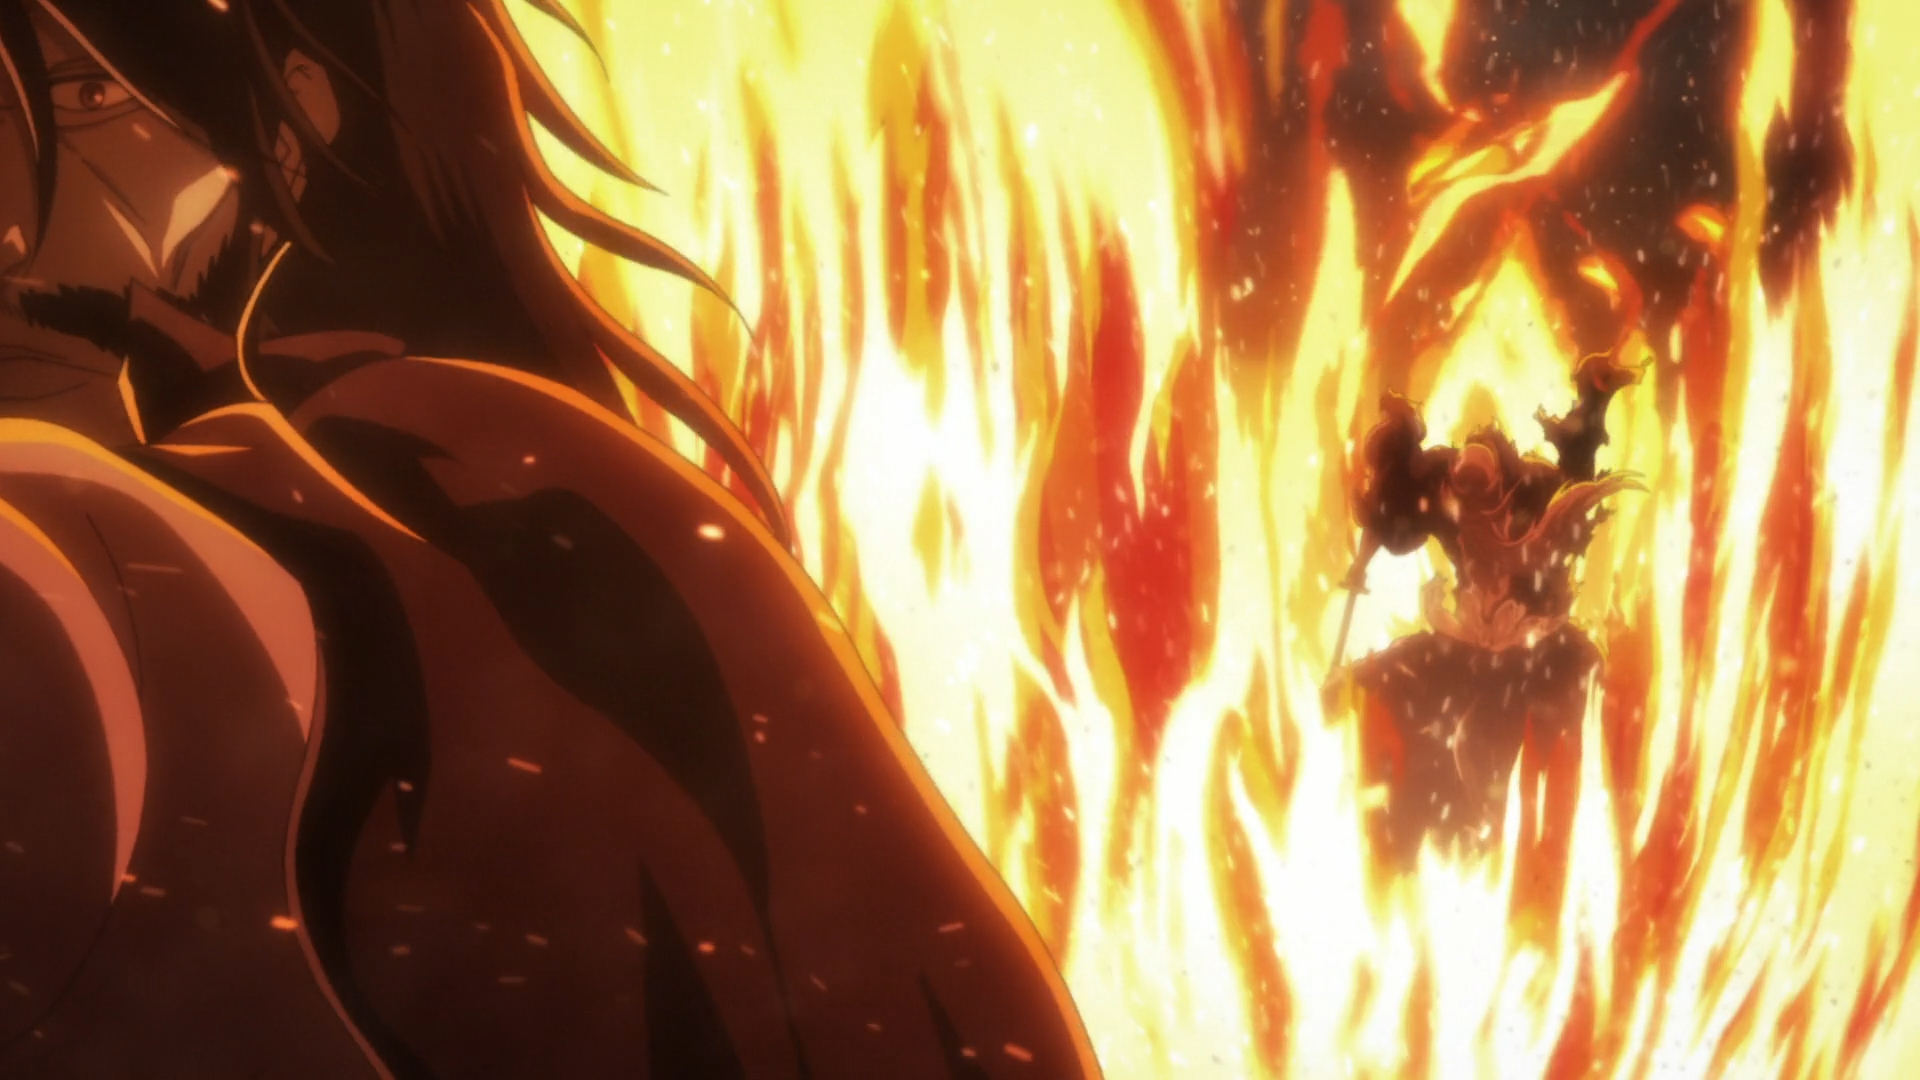 BLEACH: Thousand-Year Blood War' is Anime Corner's Top Anime of Fall 2022 :  r/bleach